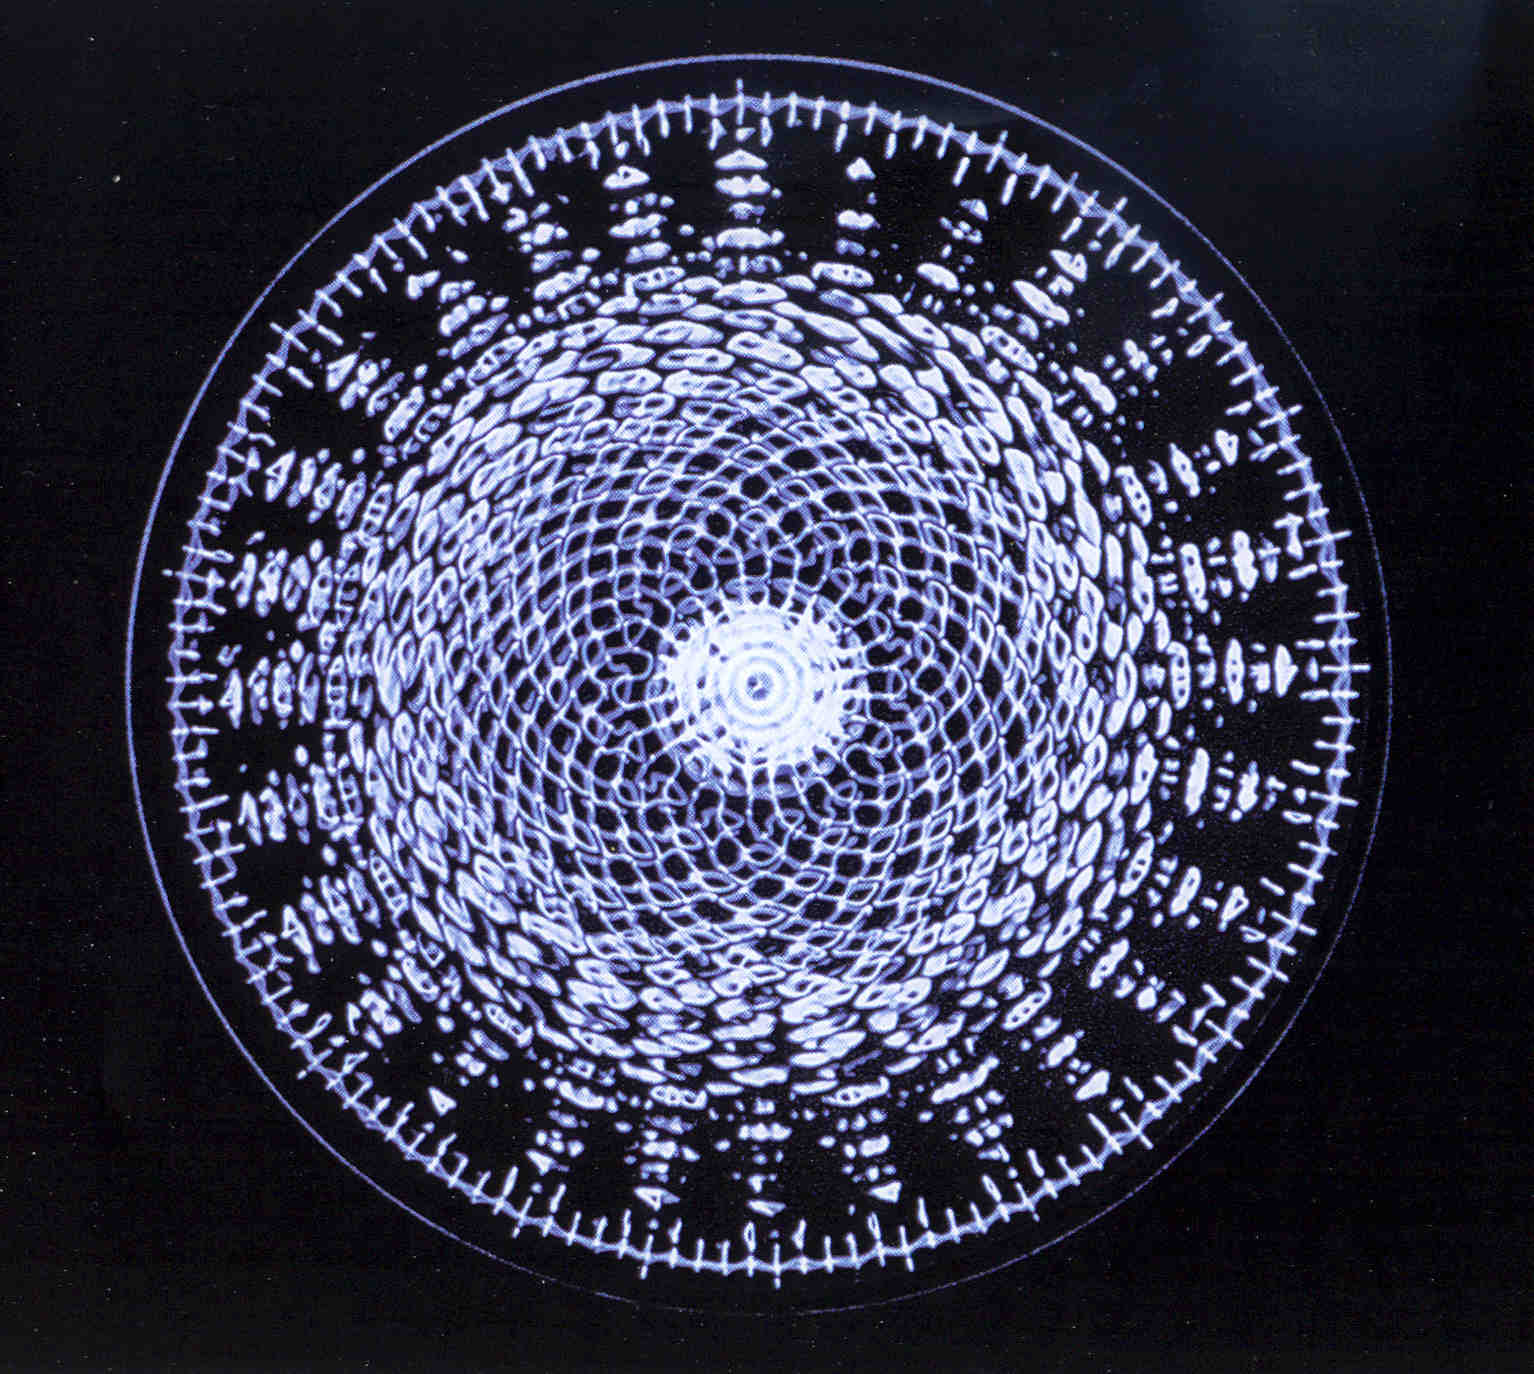 cymatics, the study of sound vibration in matter